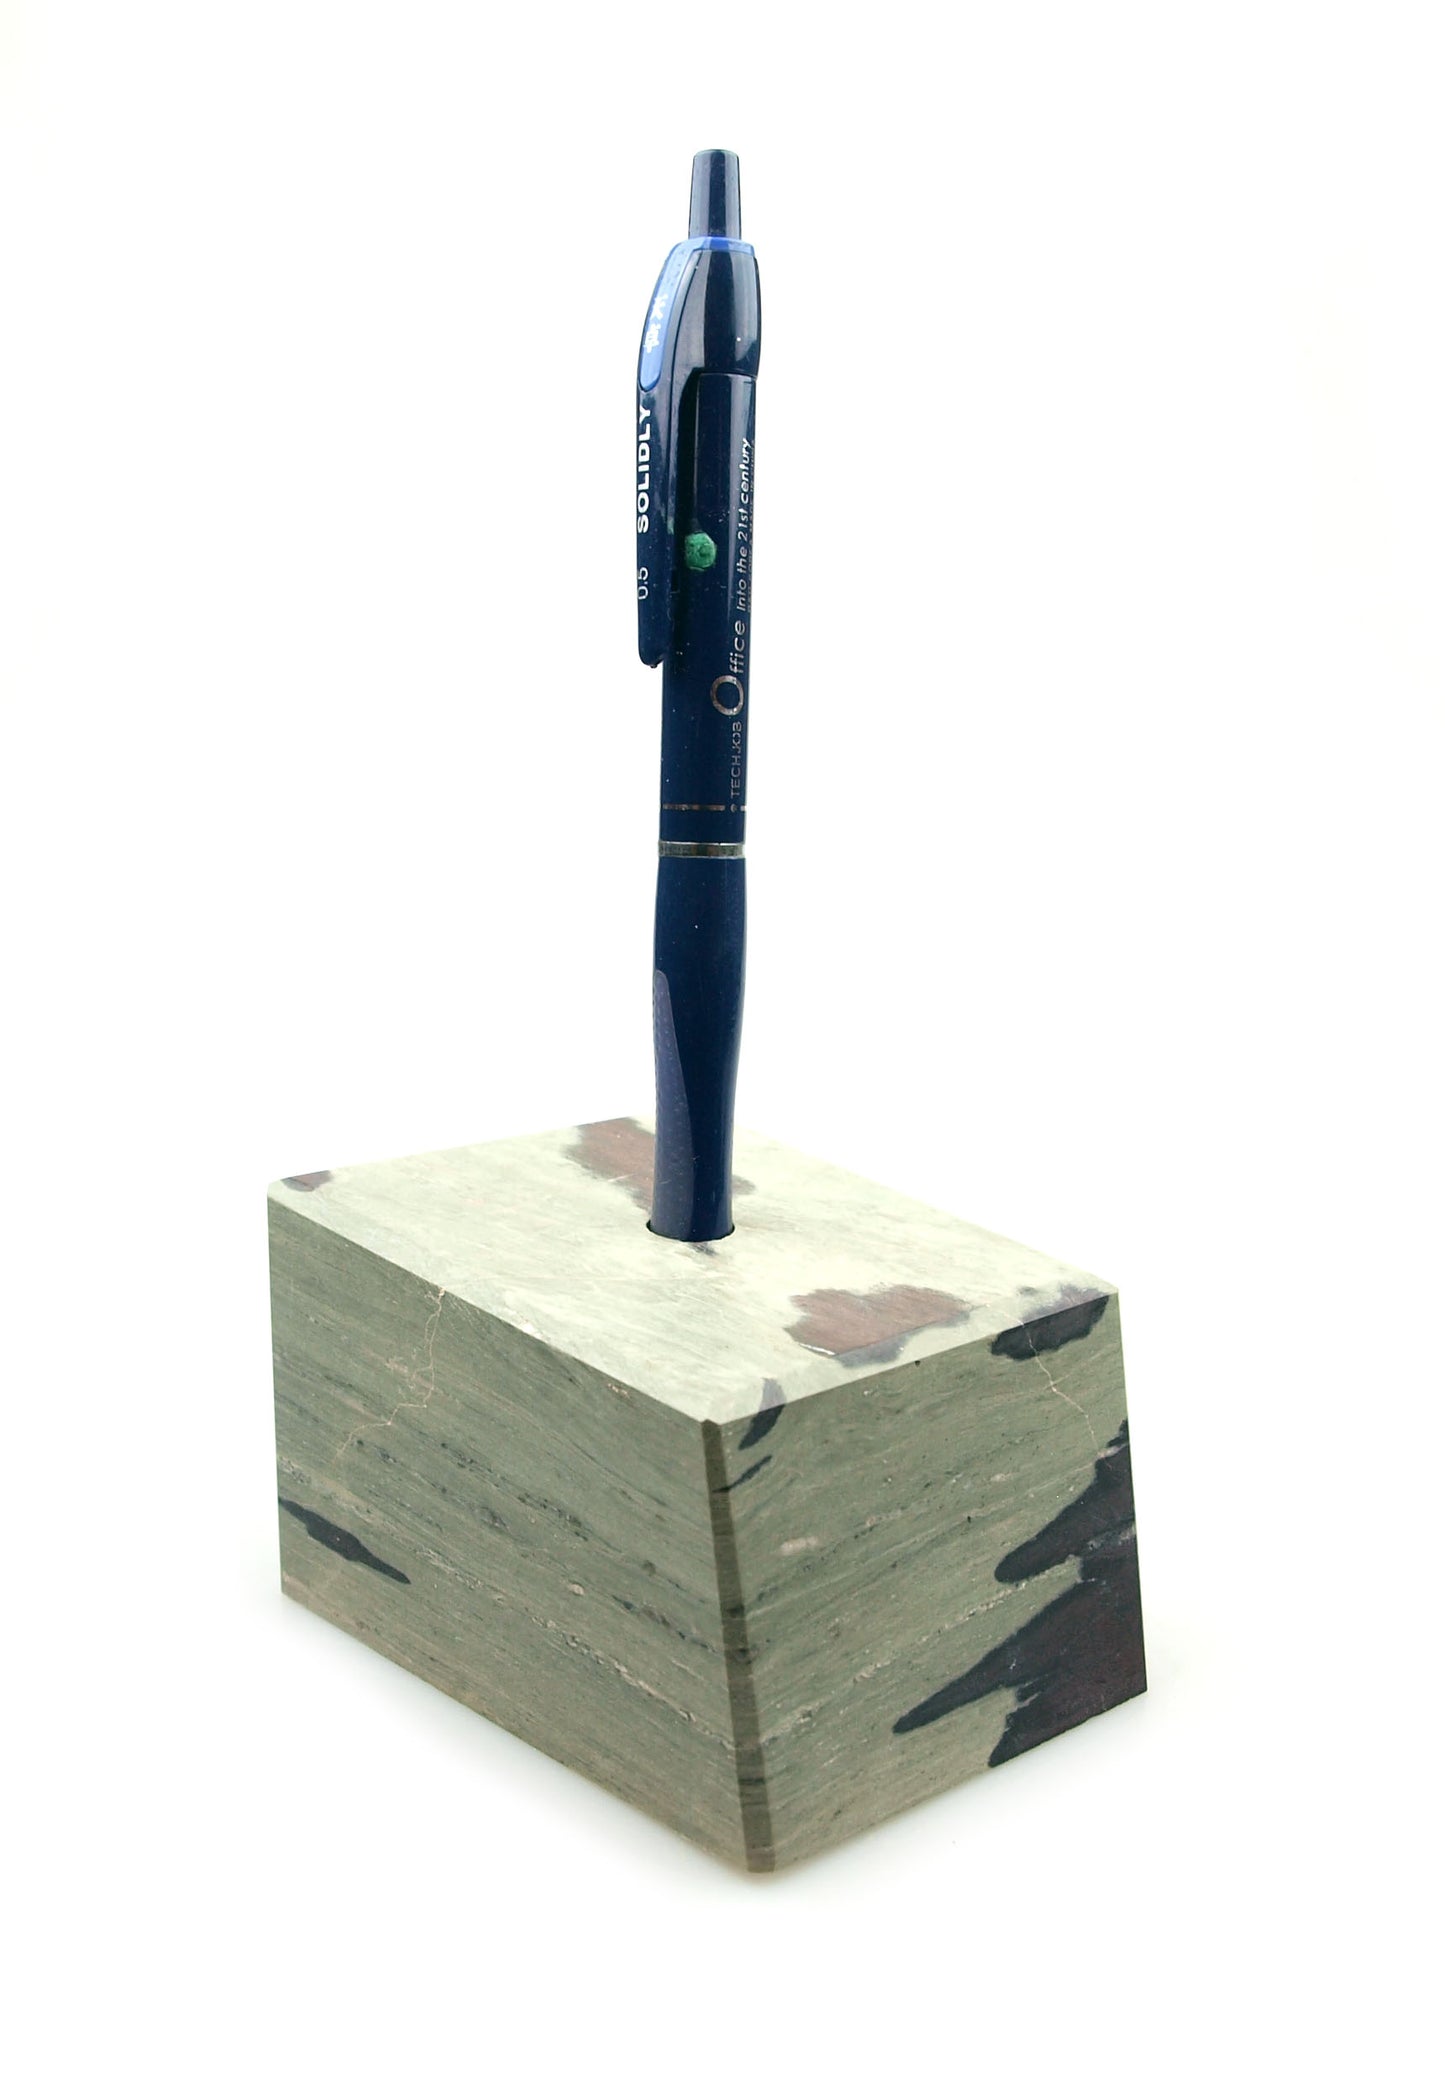 A talc slate pencil stand